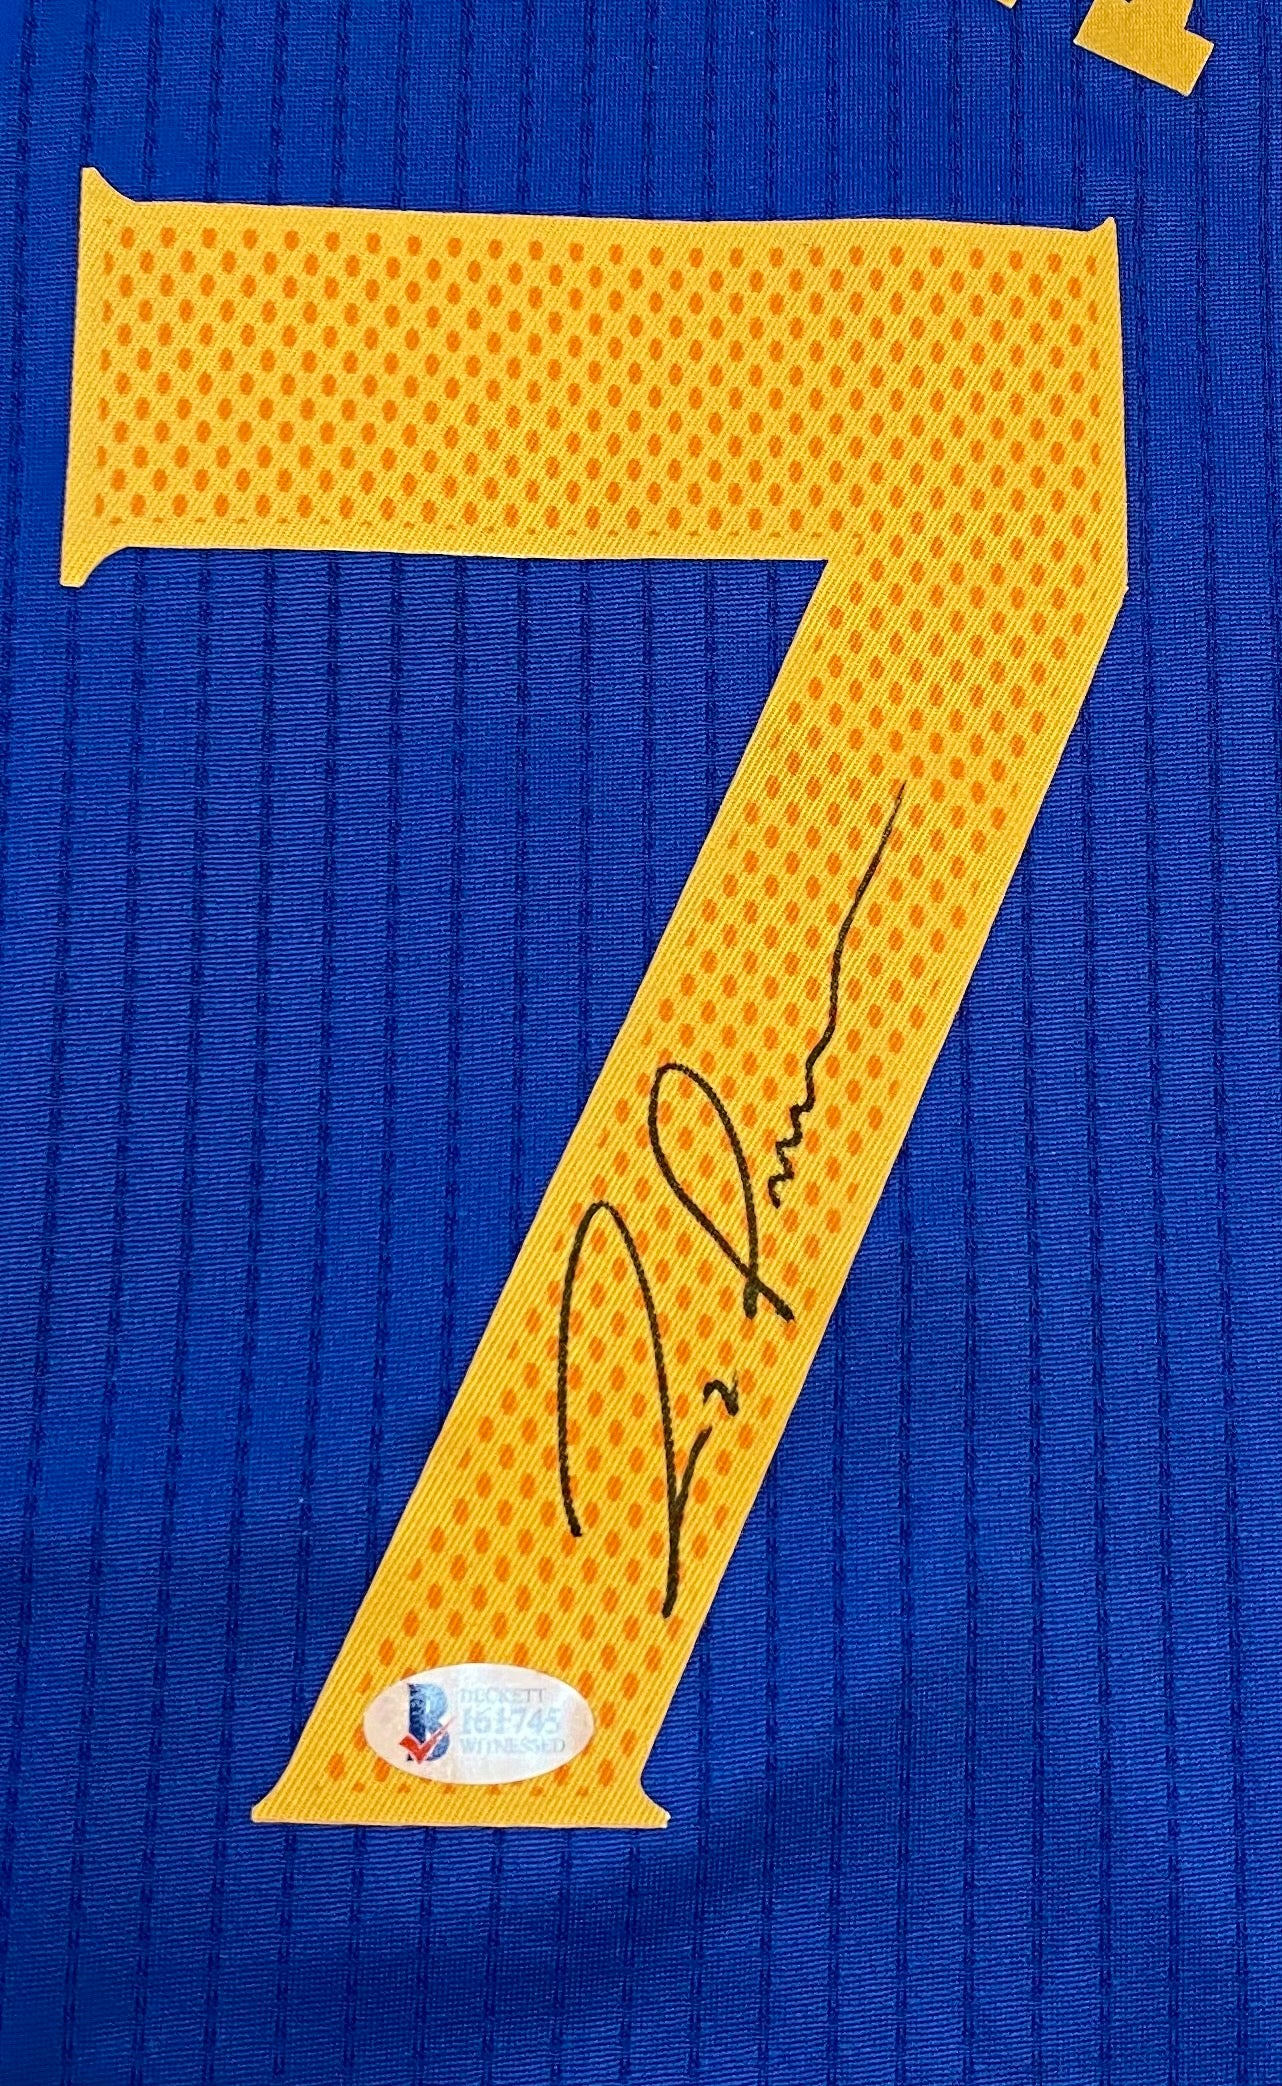 Zaza Pachulia Golden State Warriors Signed Framed Jersey - Blue